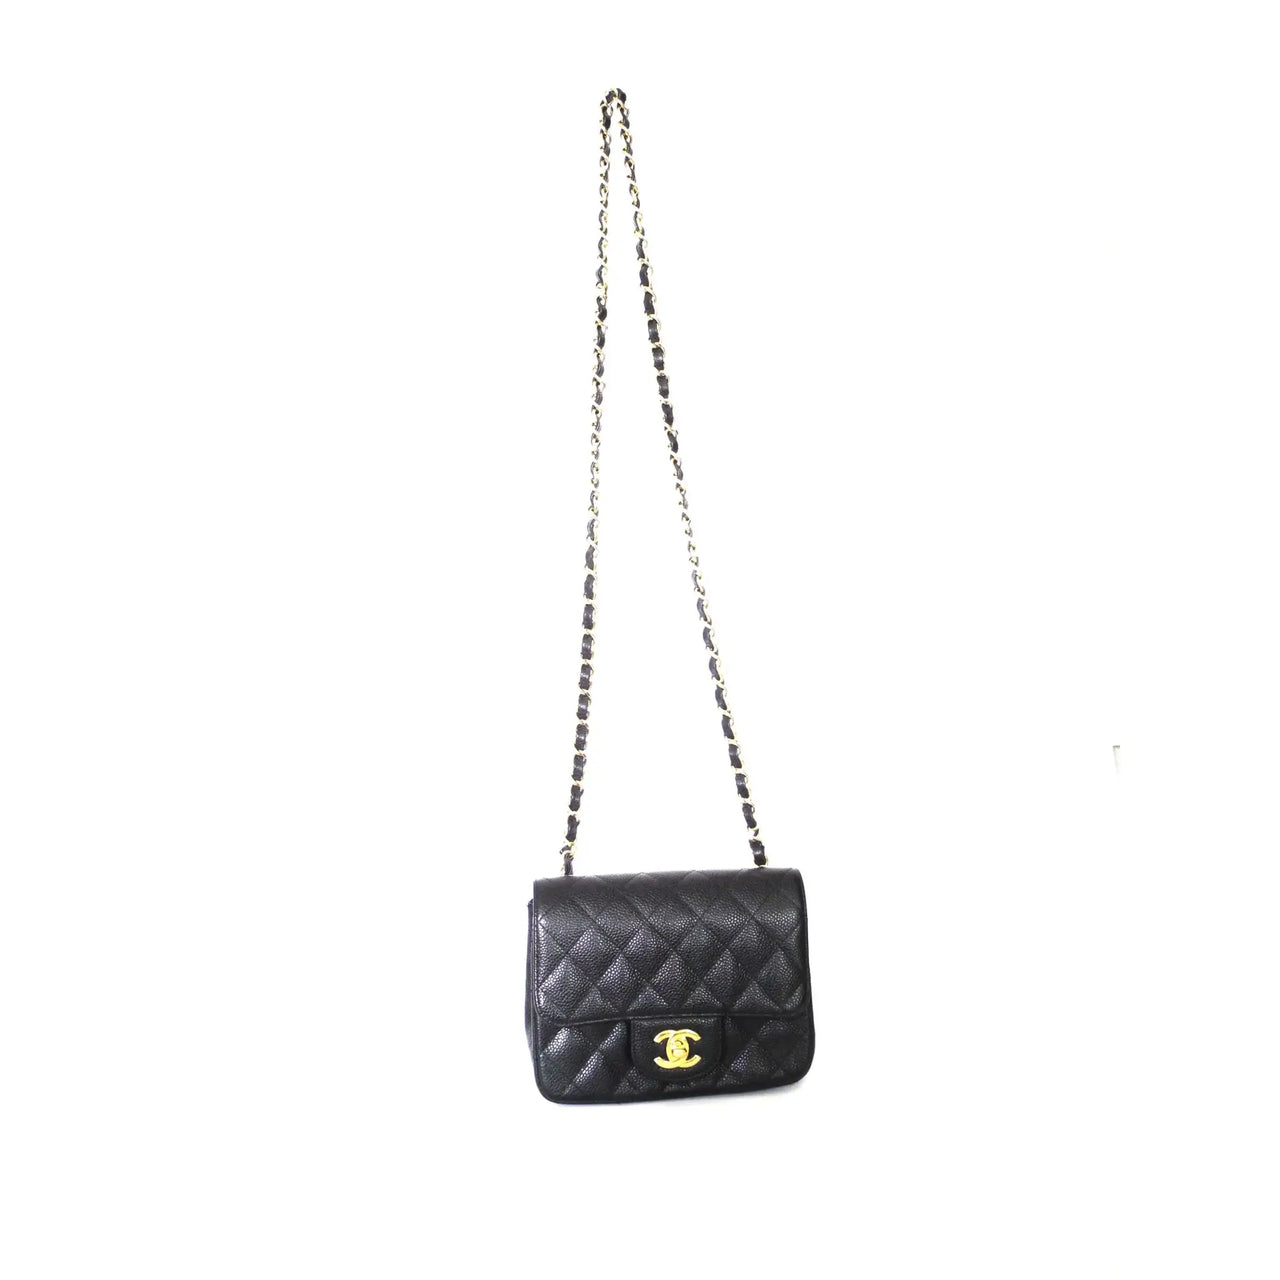 Chanel Authenticated Timeless/Classique Handbag